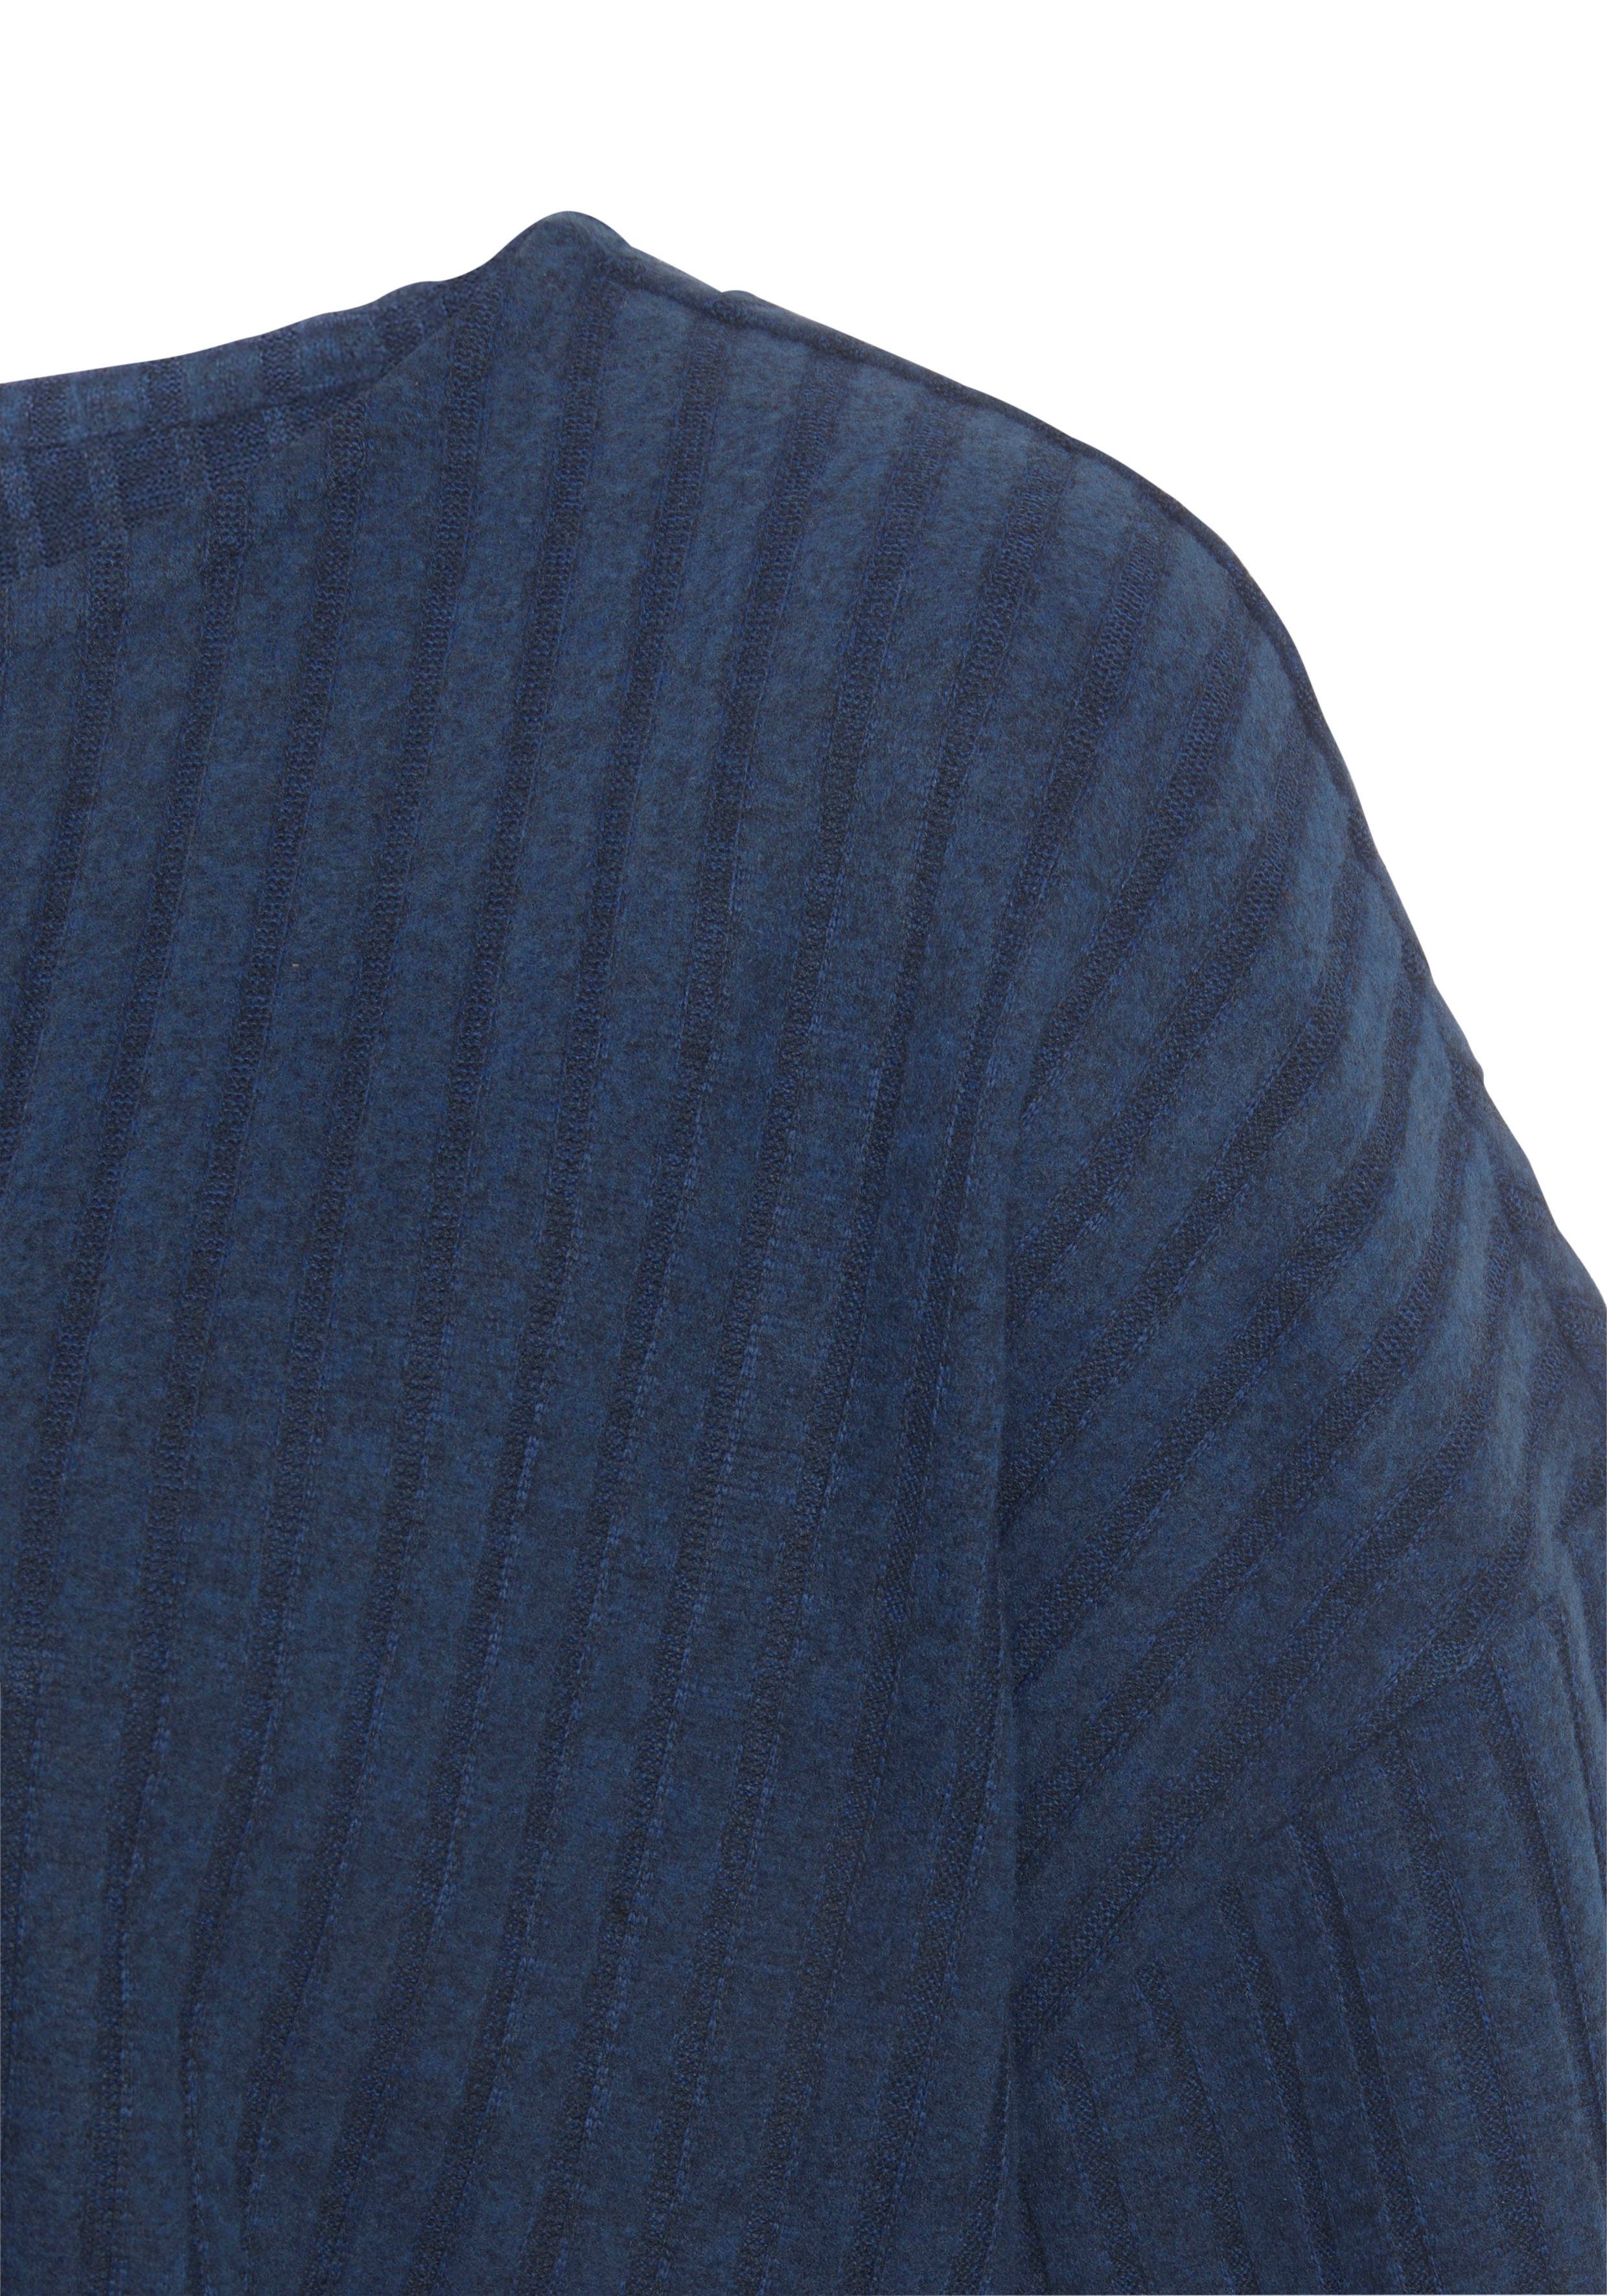 LASCANA -Loungeshirt Strick, blau-melange aus Loungewear weichem 3/4-Arm-Shirt